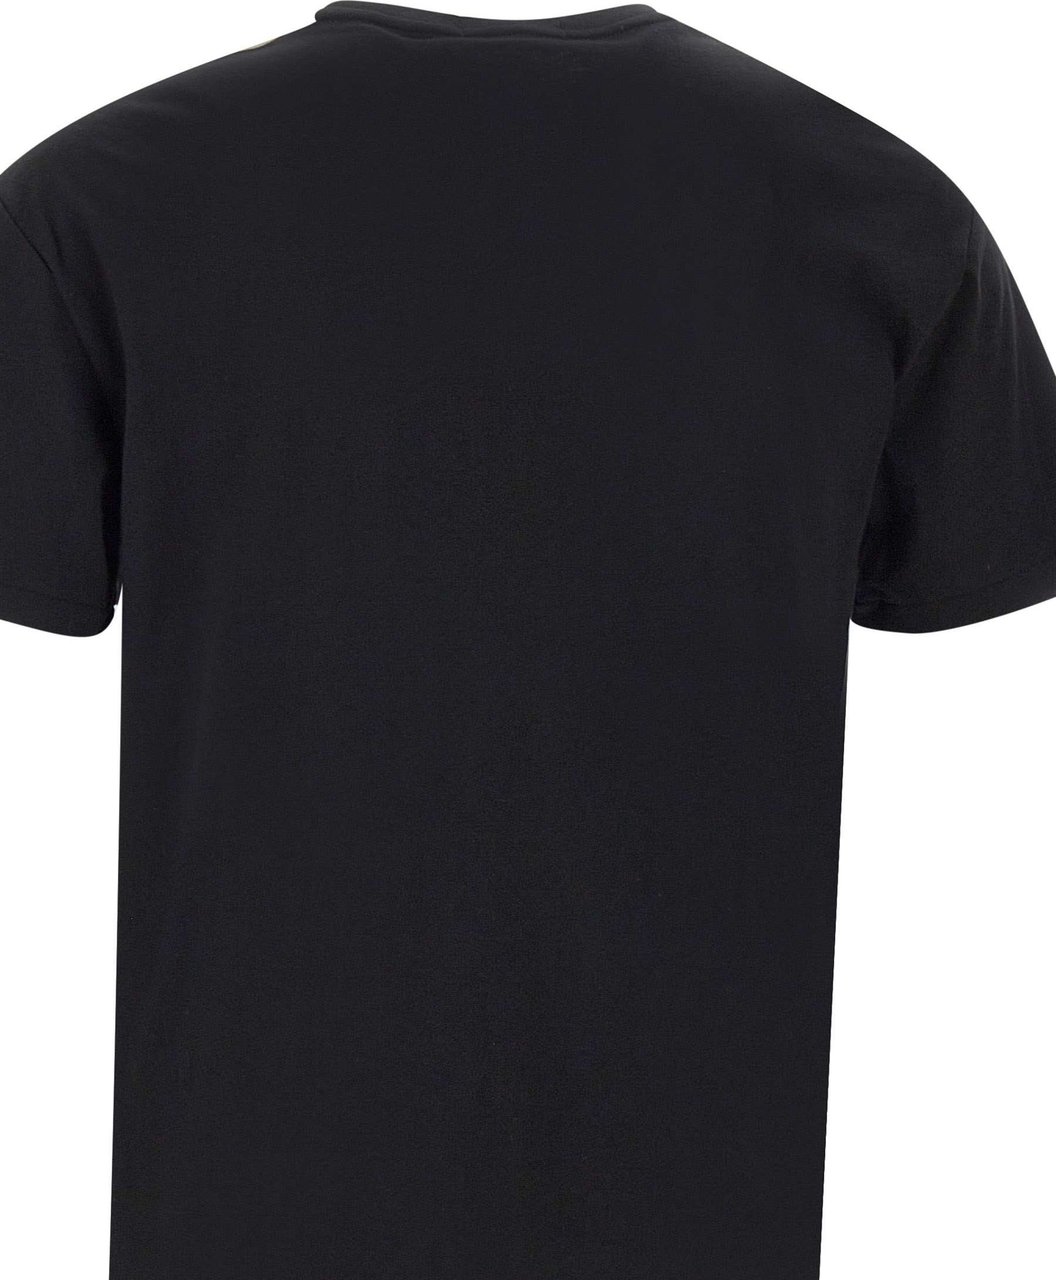 Ralph Lauren Polo T-shirts And Polos Black Zwart